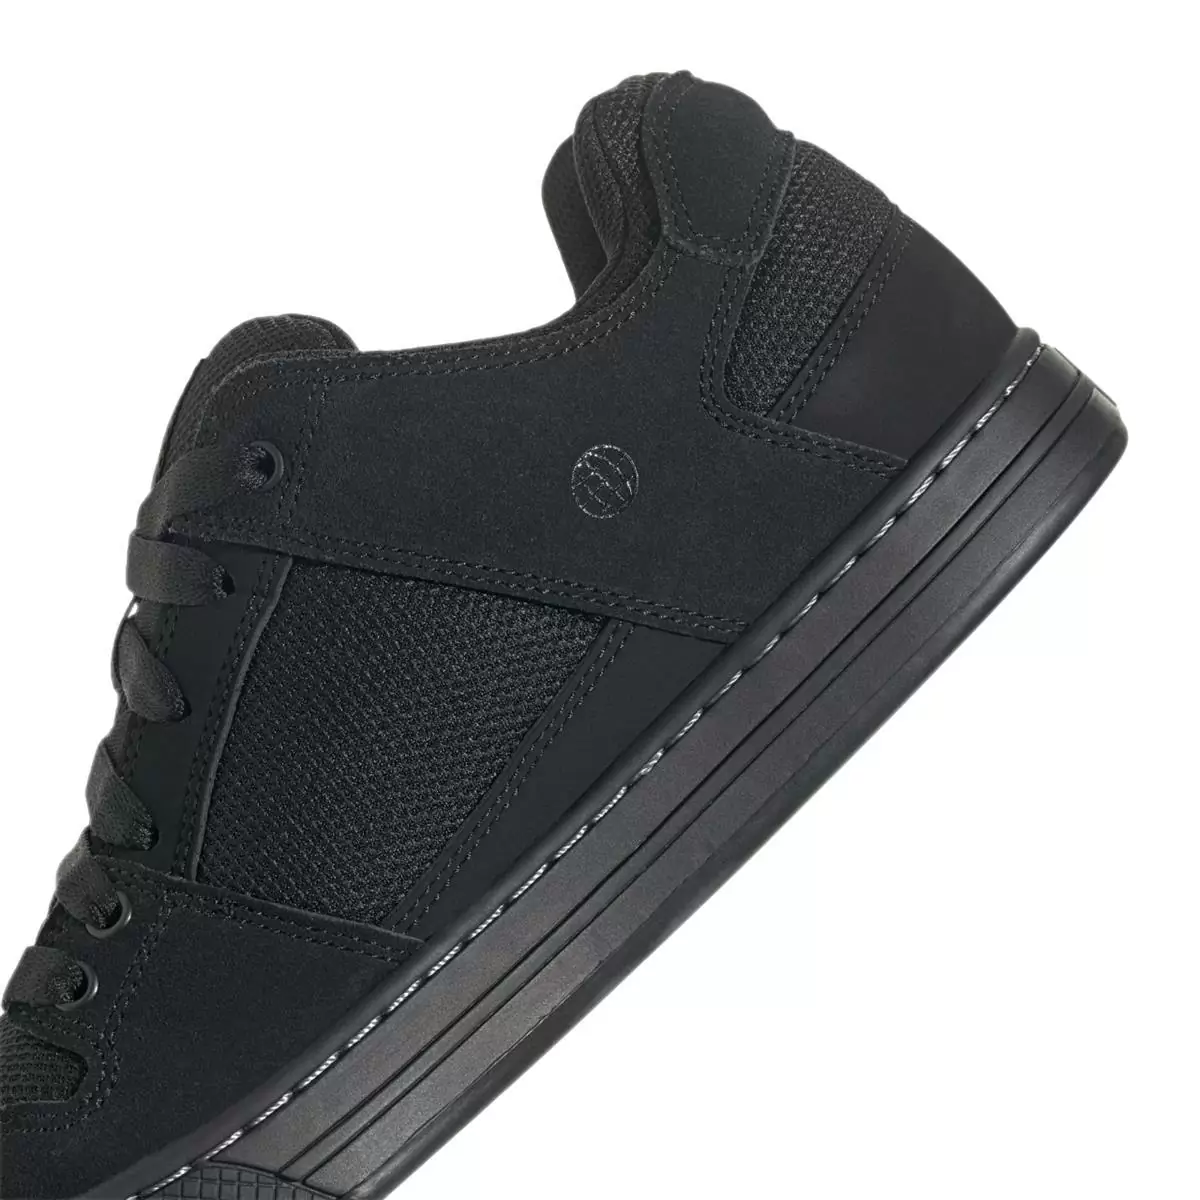 MTB Shoes Flat Freerider Black Size 41 #7